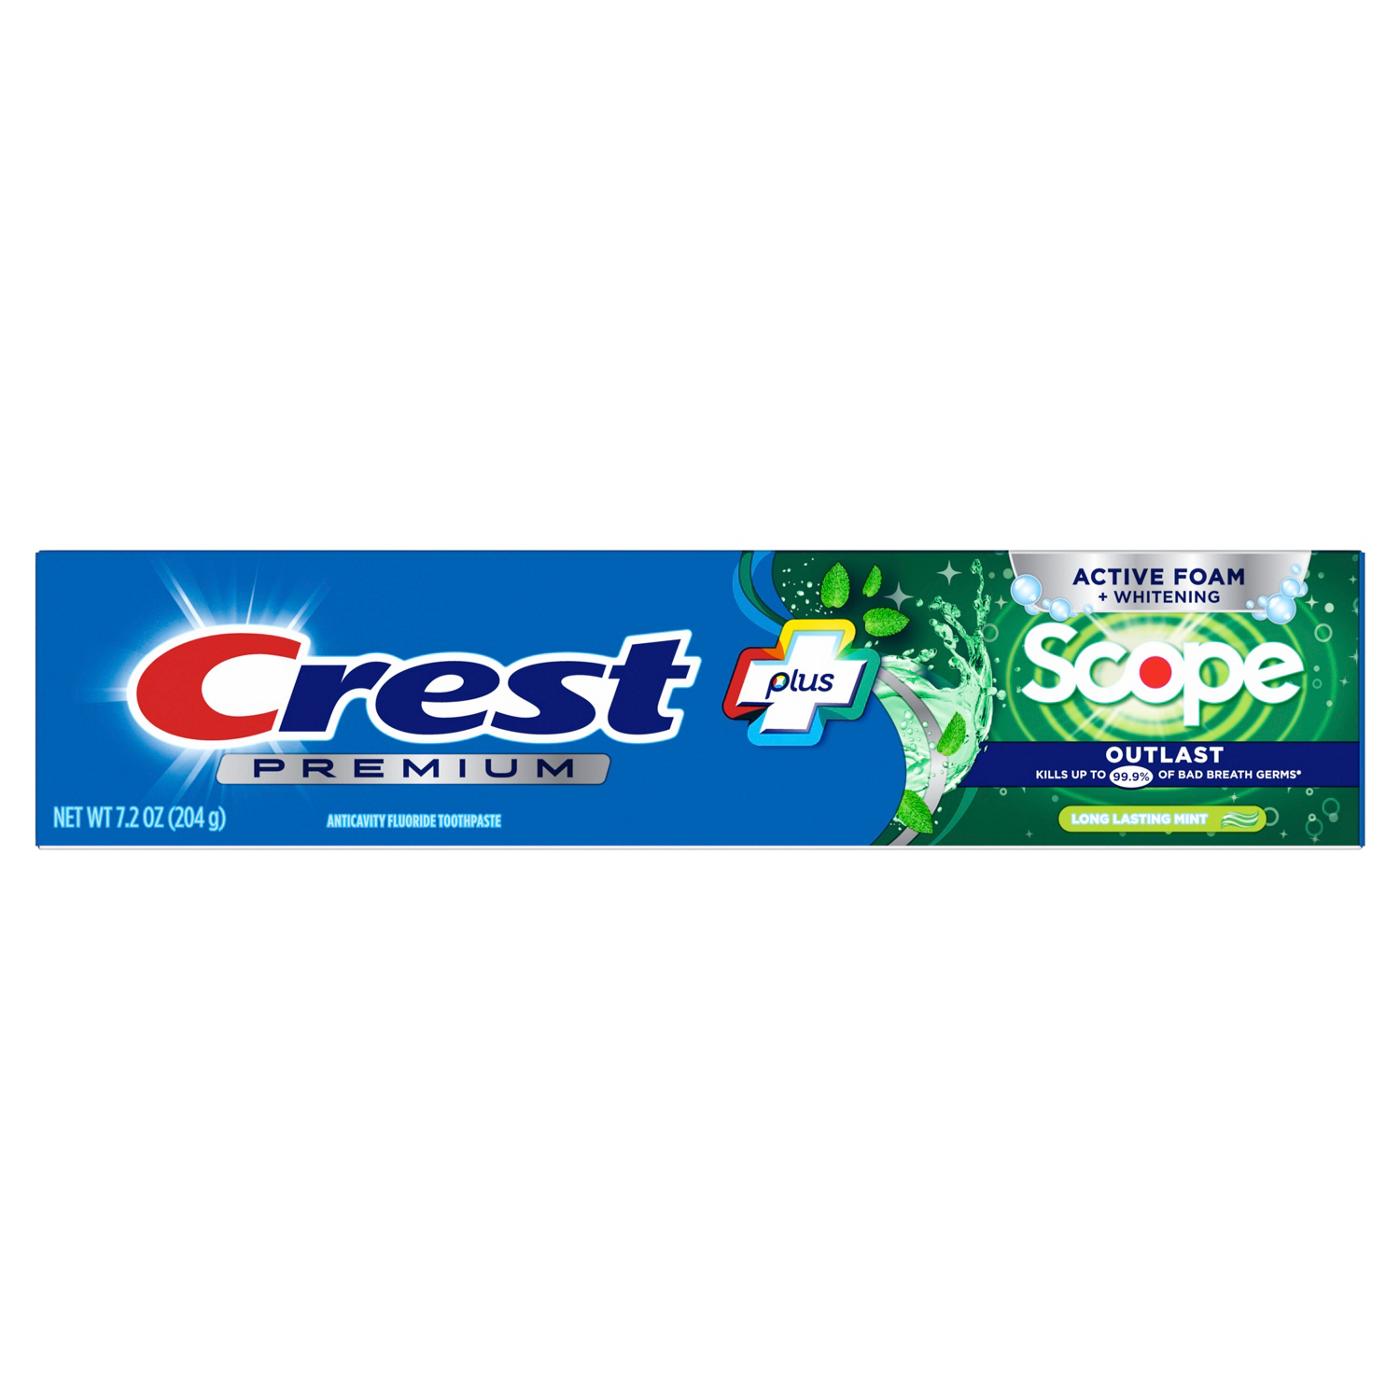 Crest Premium + Scope Outlast Active Foam Toothpaste - Long Lasting Mint; image 1 of 8